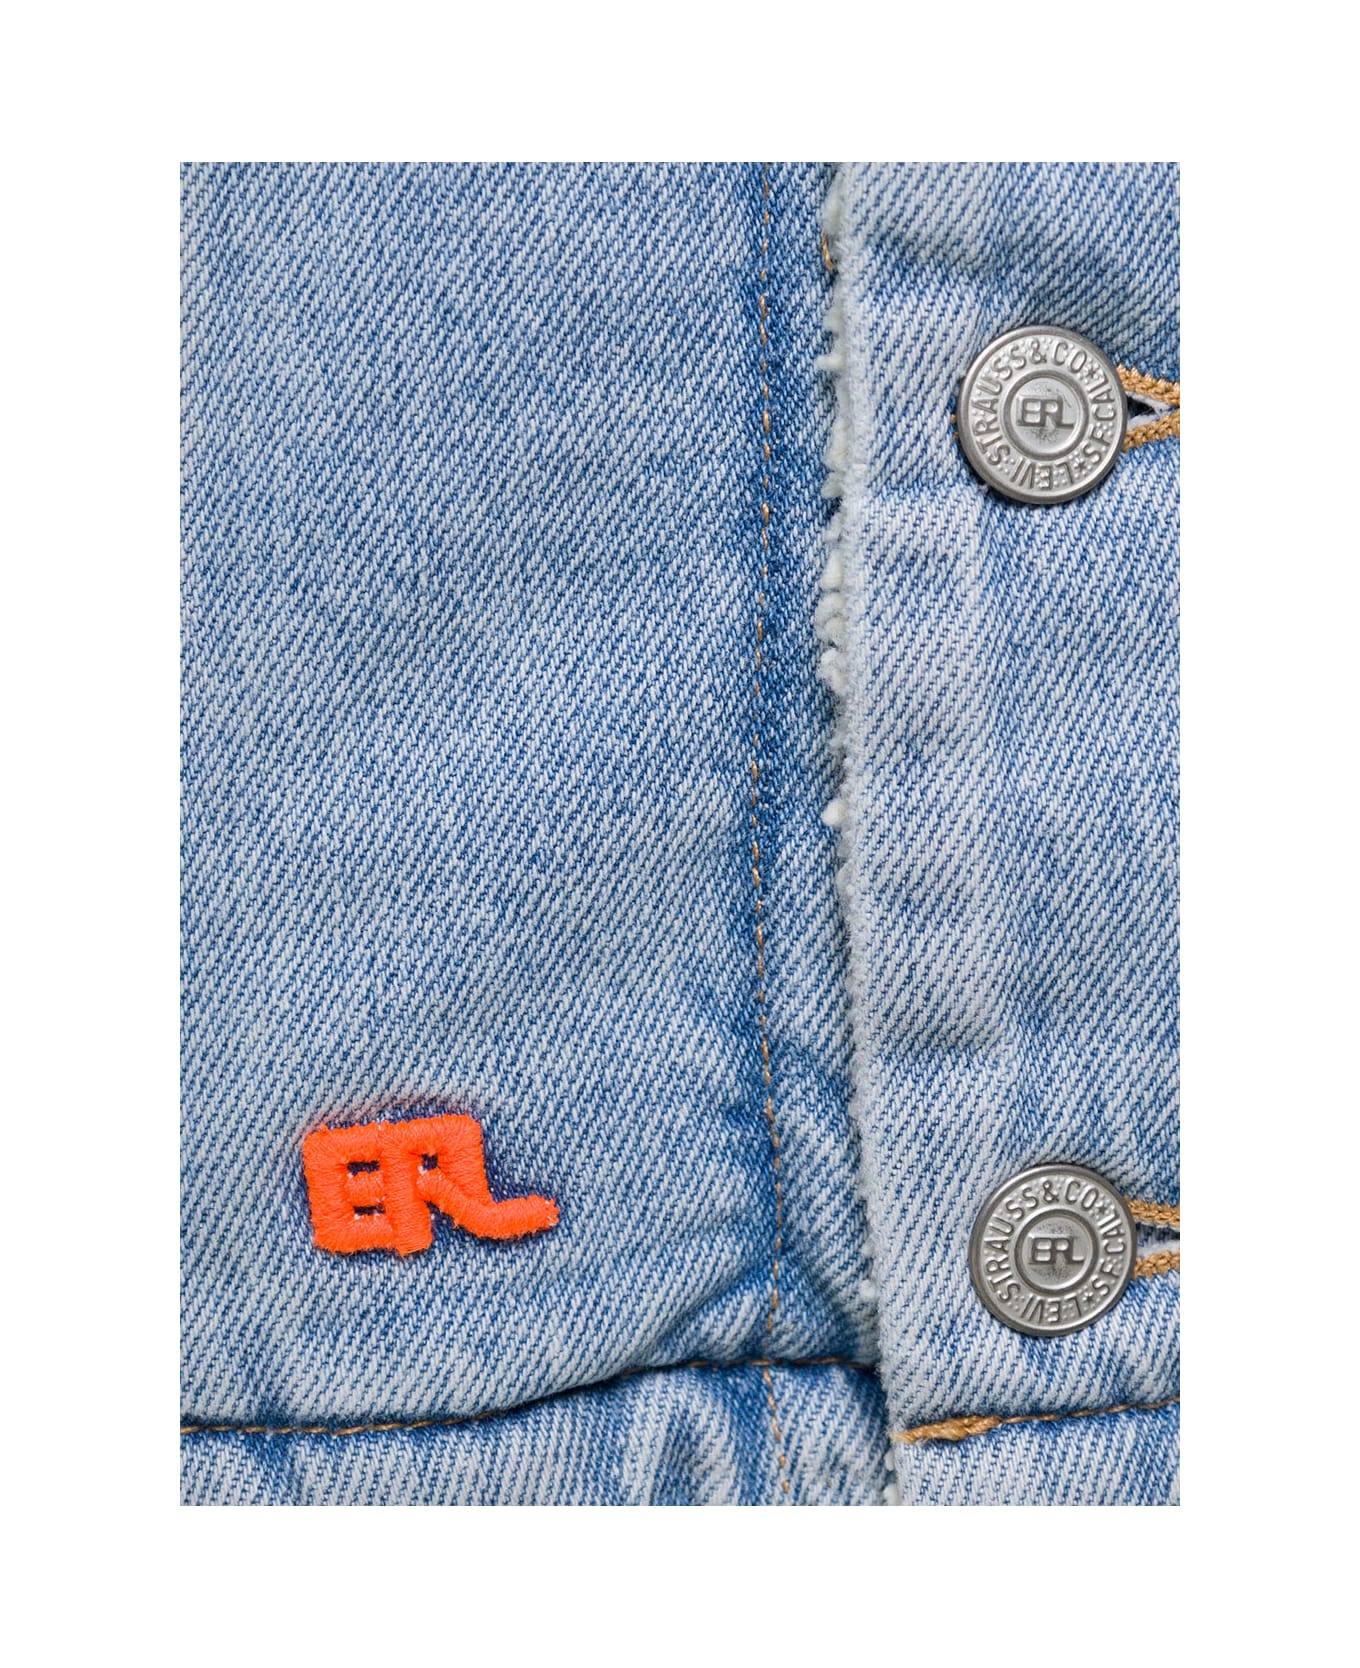 ERL 'sherpa Trucker' Light Blue Jacket With Logo Patch In Cotton Denim Erl X Levi's - Light blue